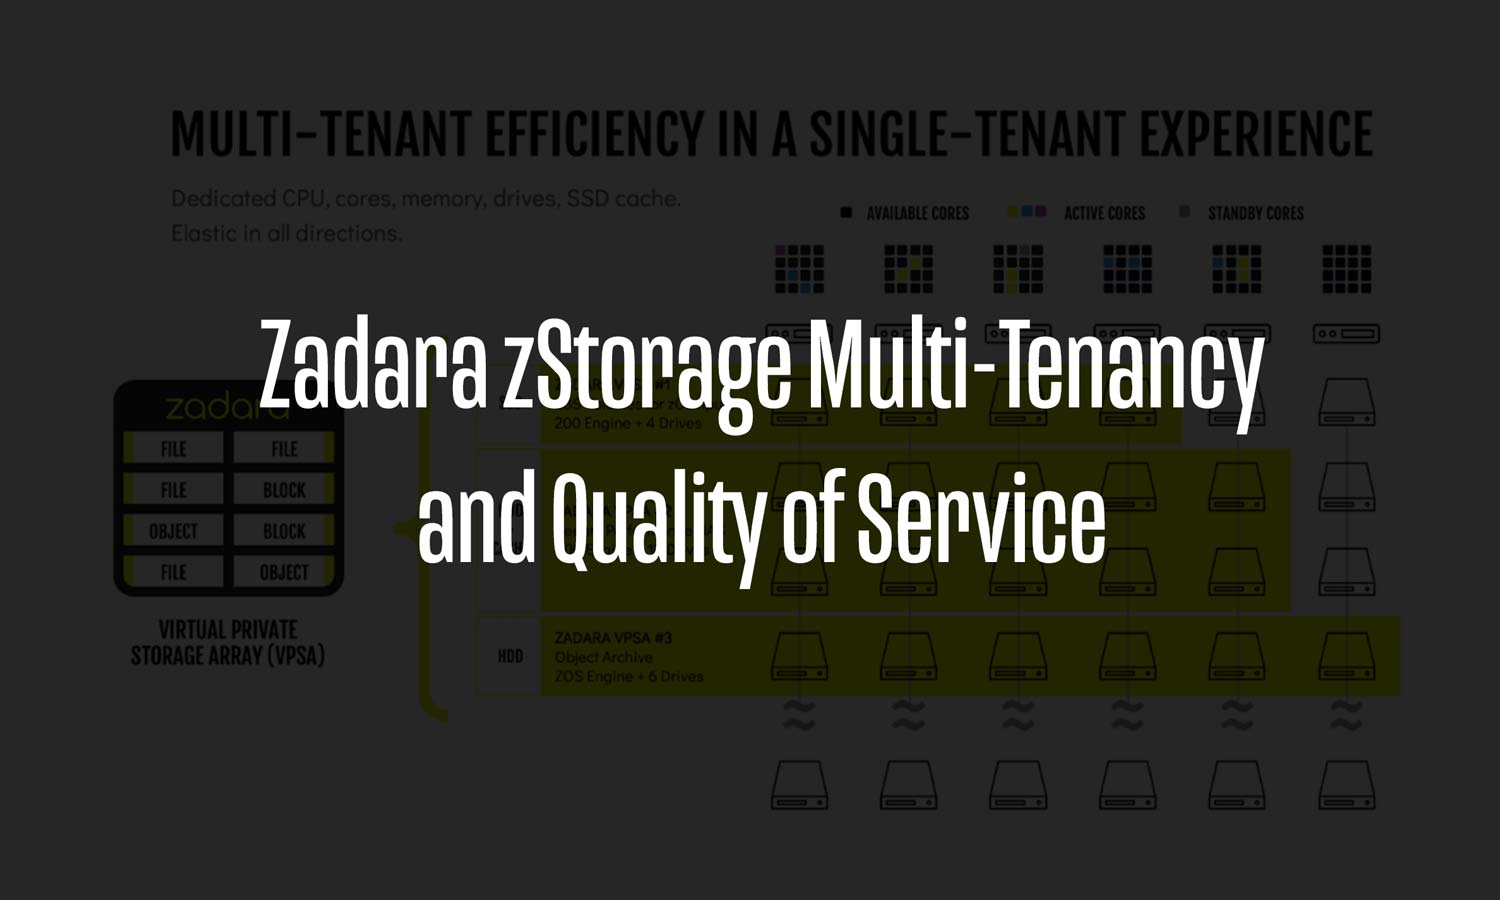 Zadara zStorage Multi-Tenancy and Quality of Service